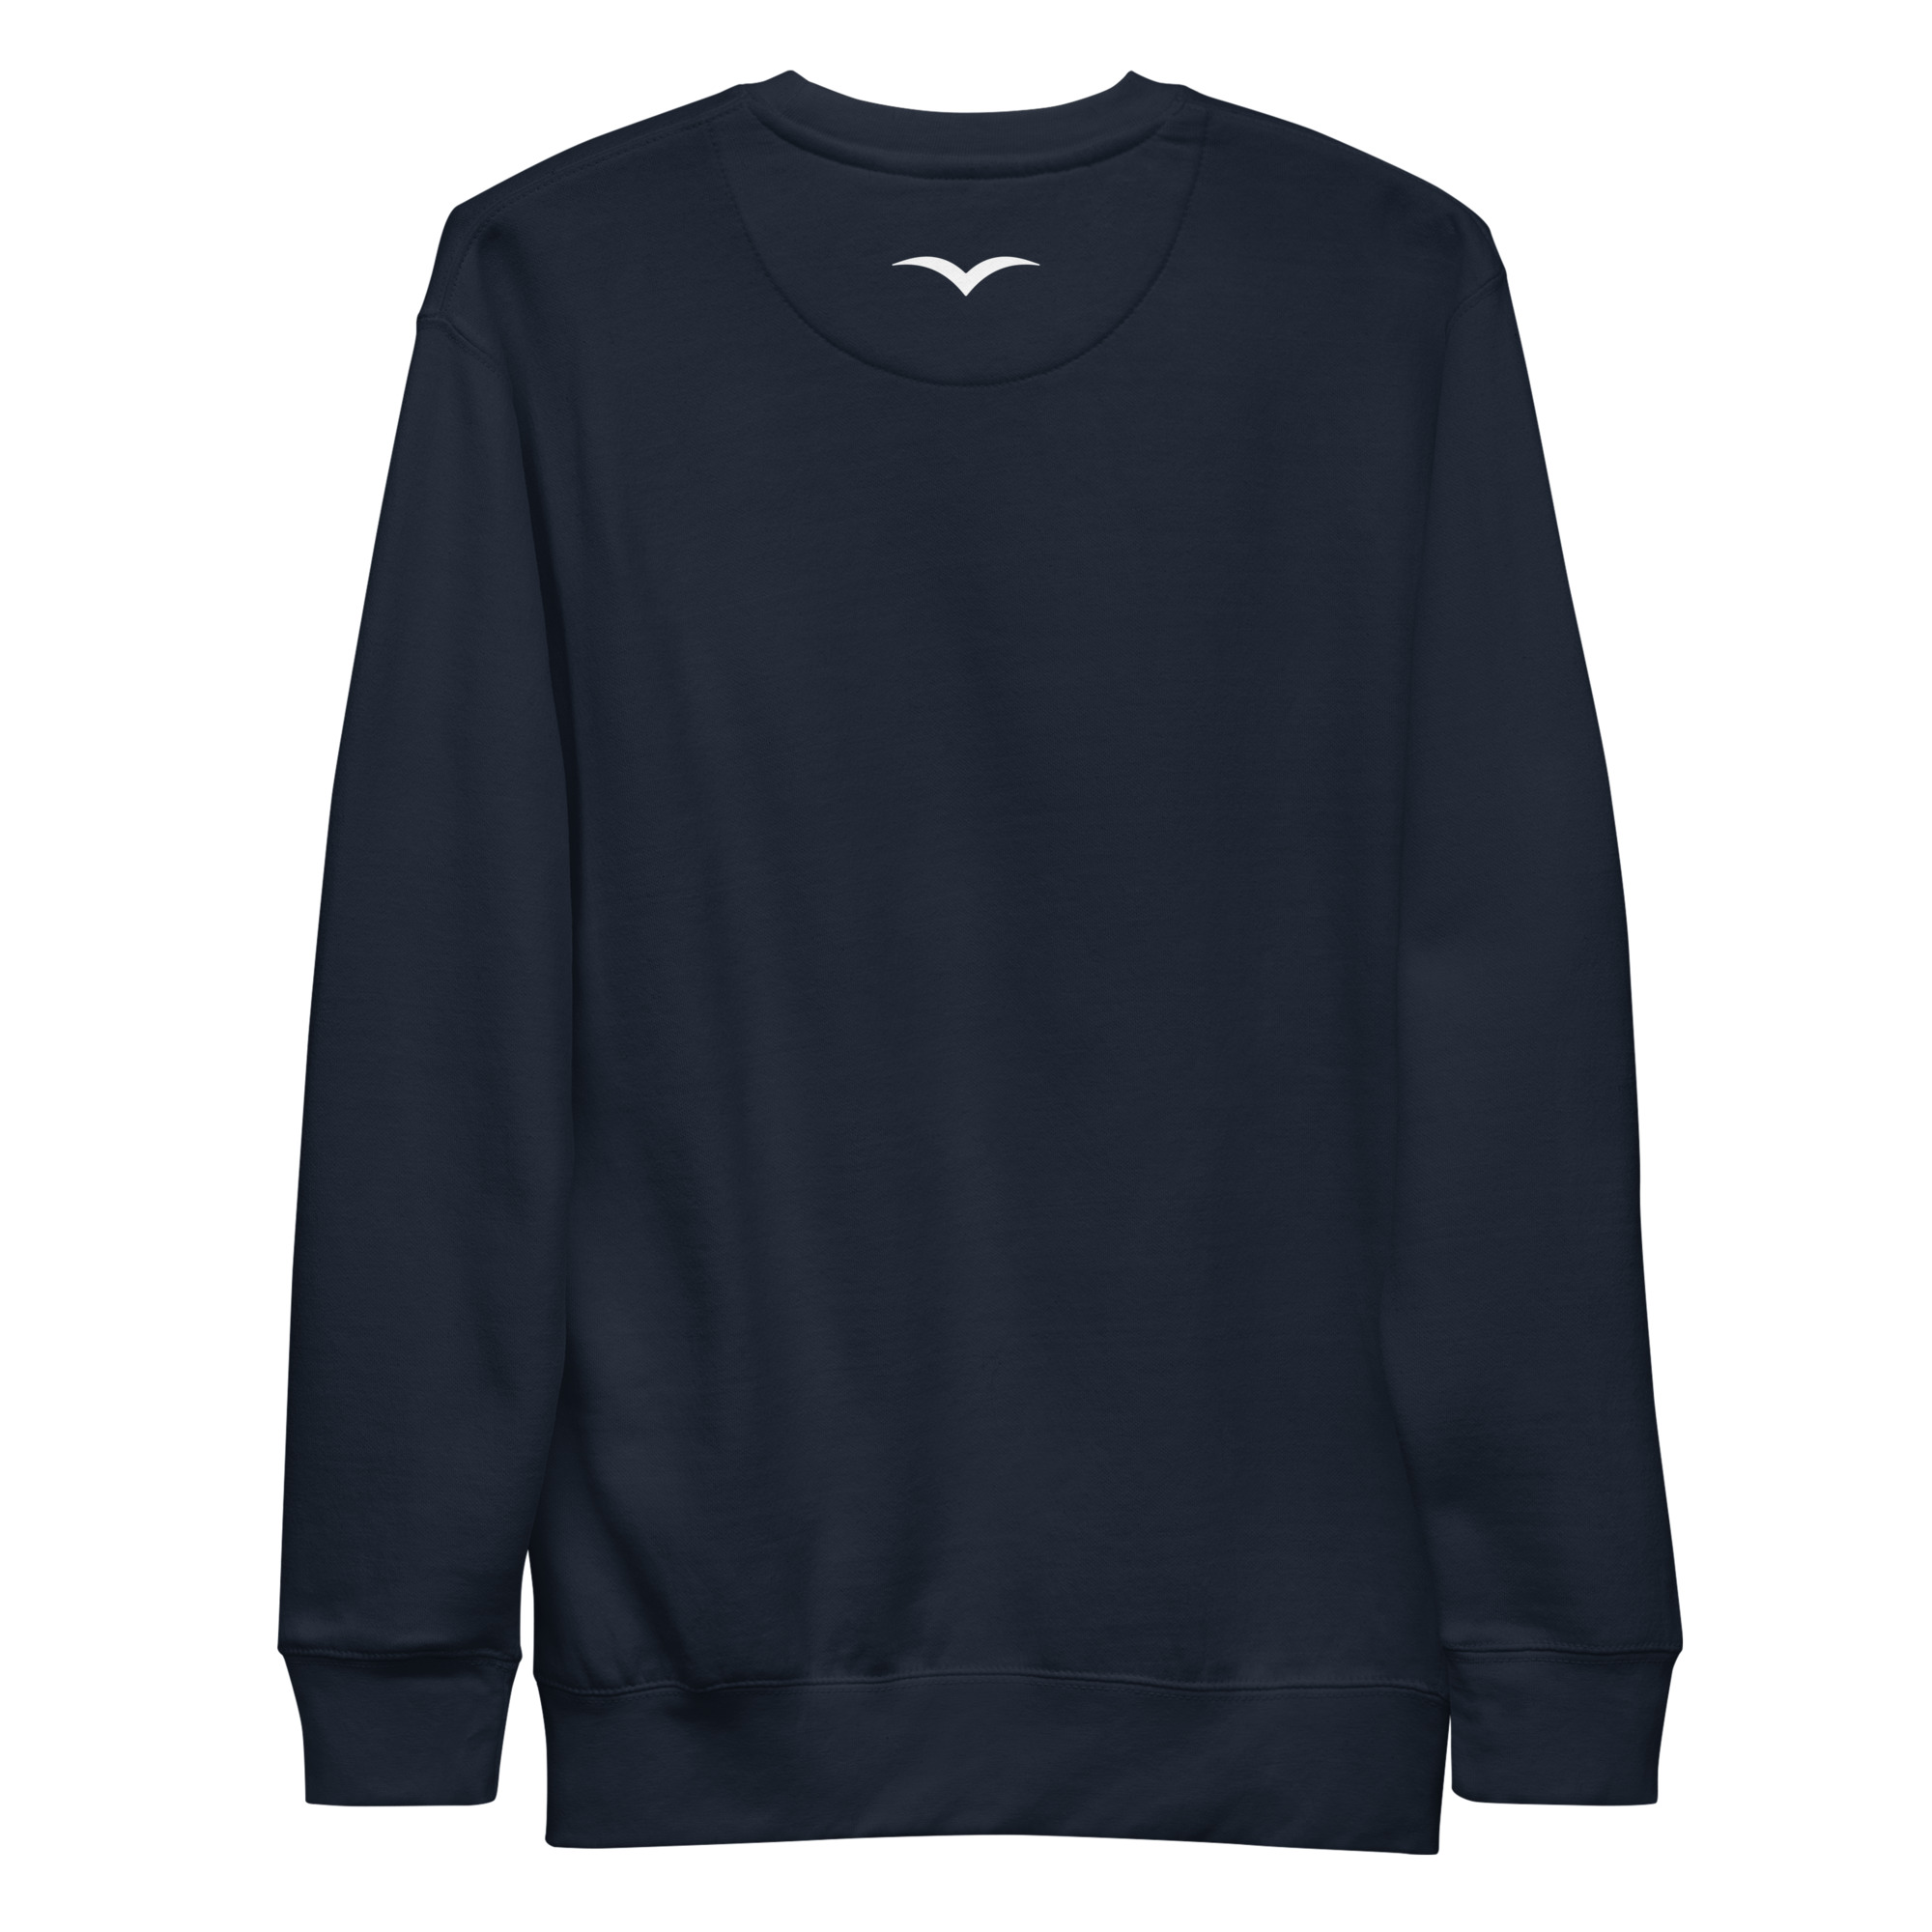 unisex-premium-sweatshirt-navy-blazer-back-6410f2cc41827.jpg